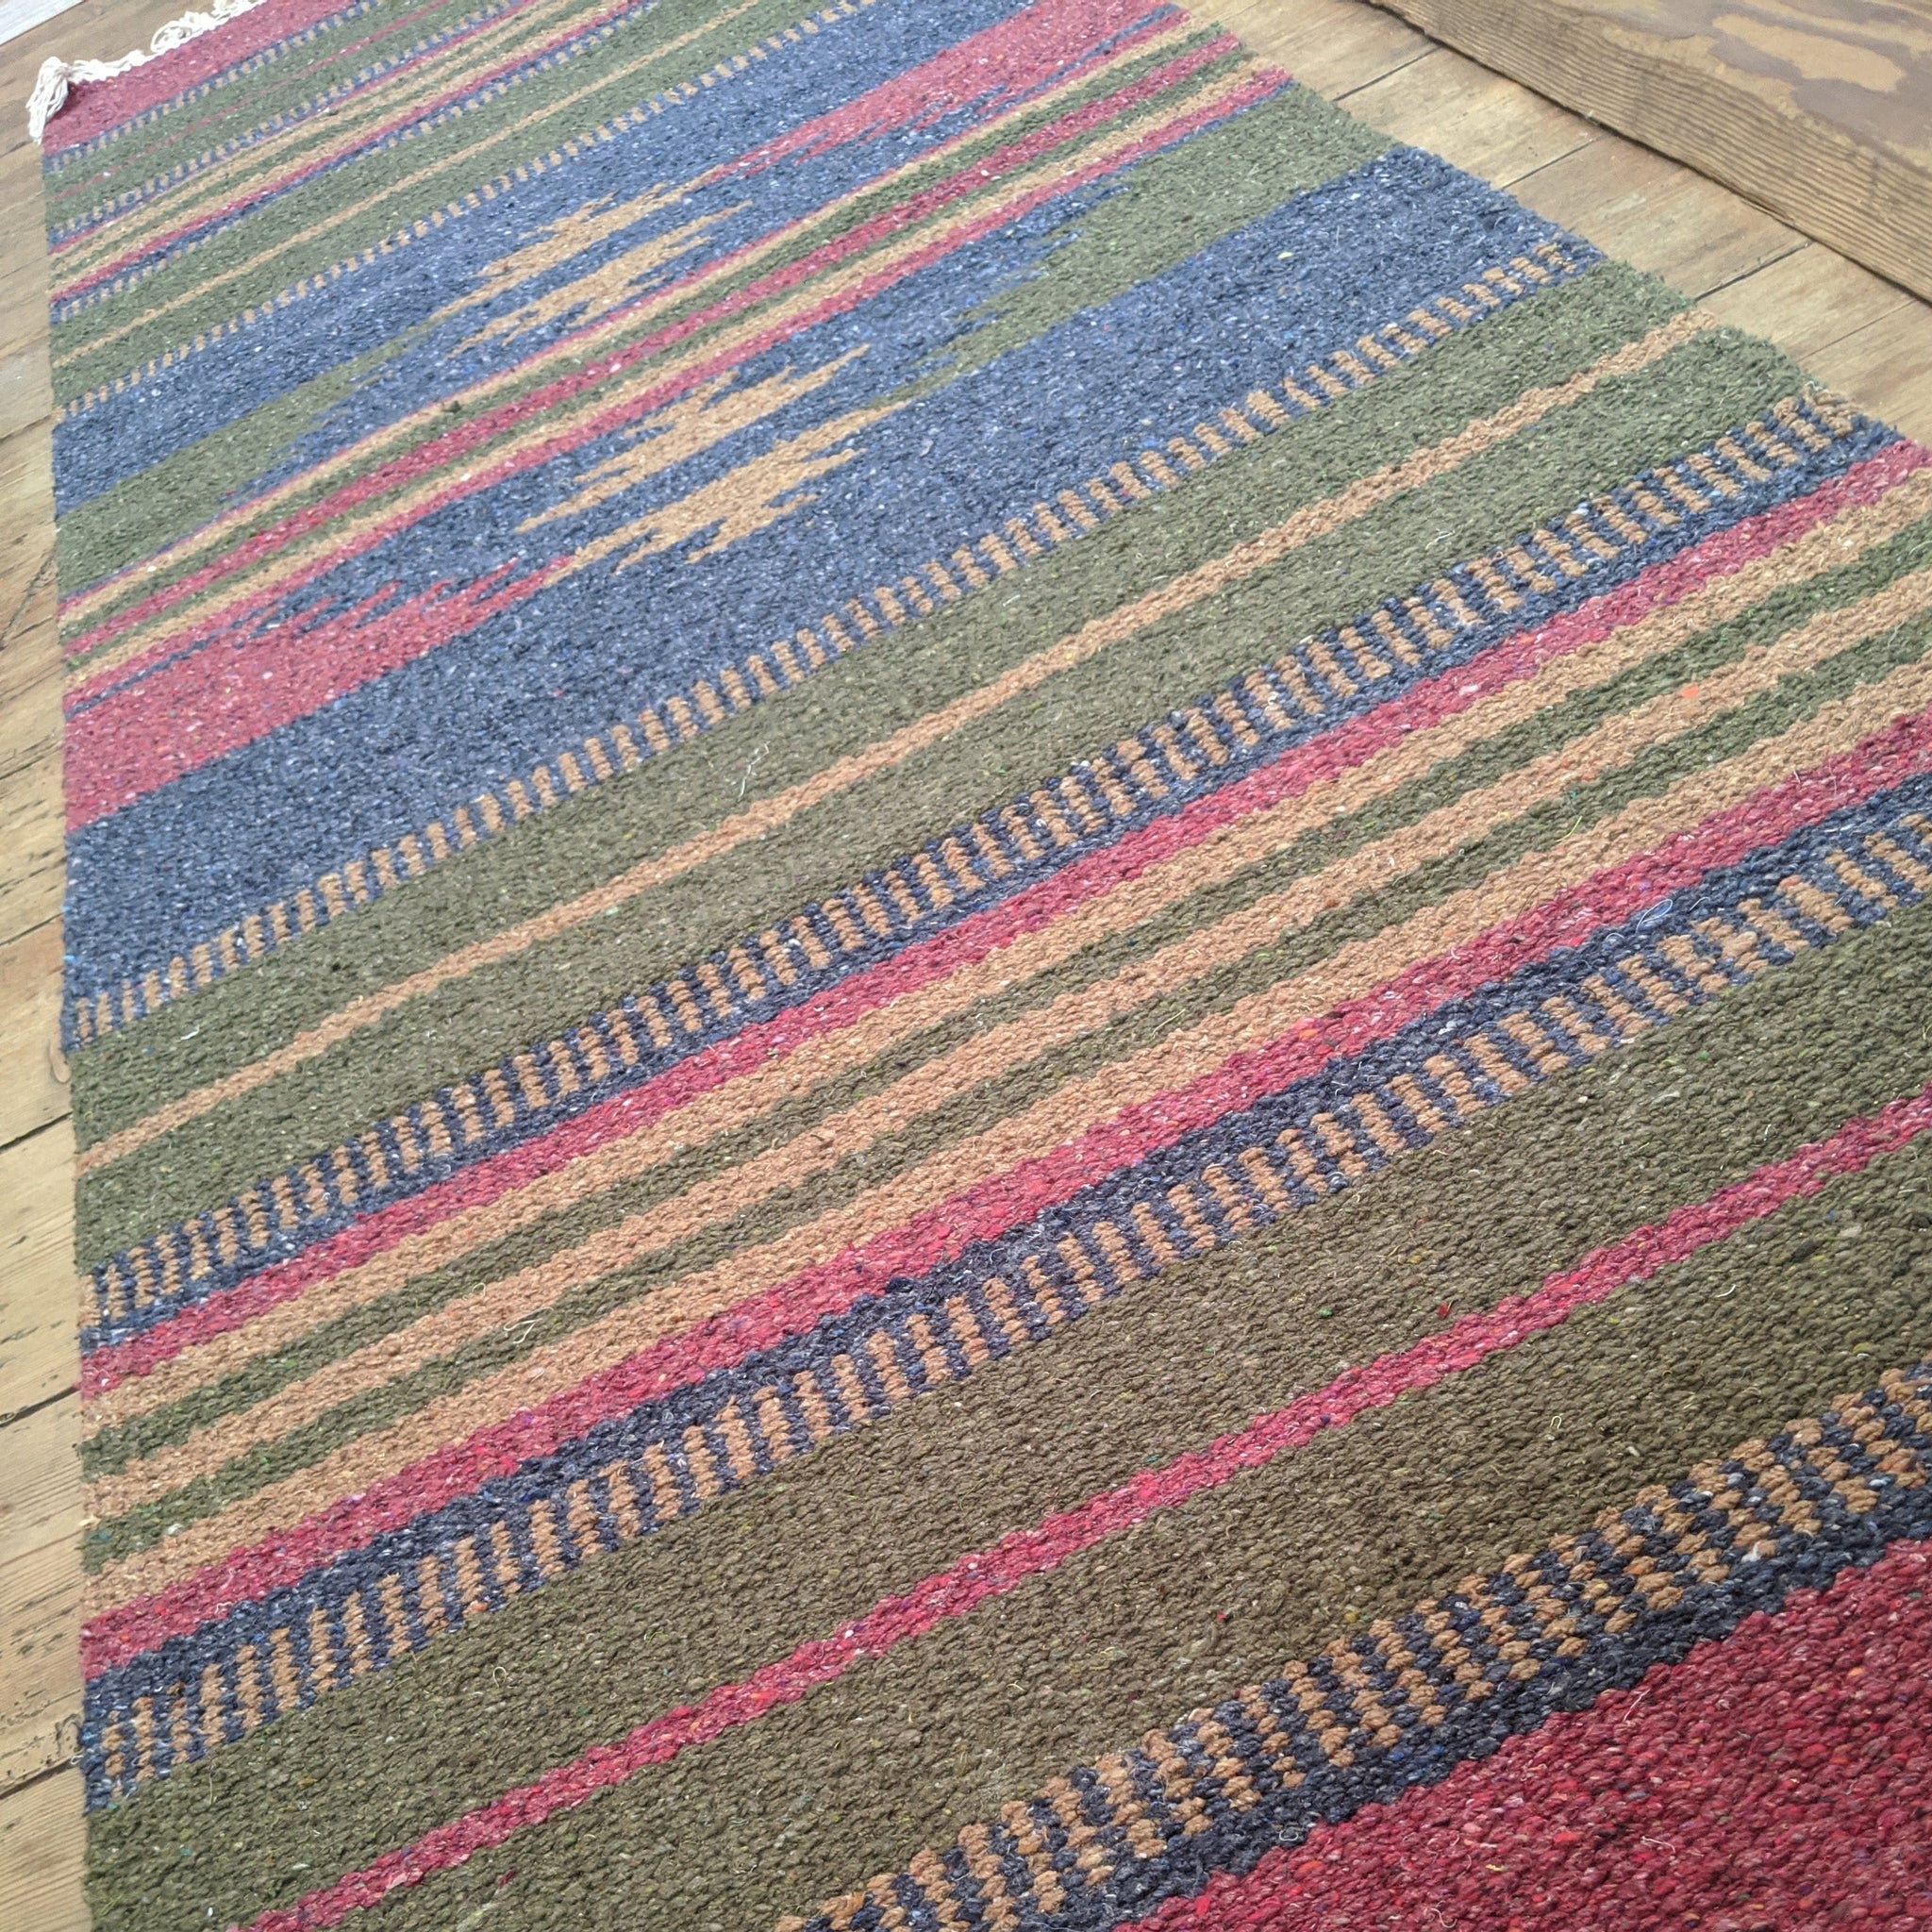 New 70x200cm INDIAN KILIM KELIM 100% COTTON Aztec Design HAND WOVEN Carpet Rug Runner